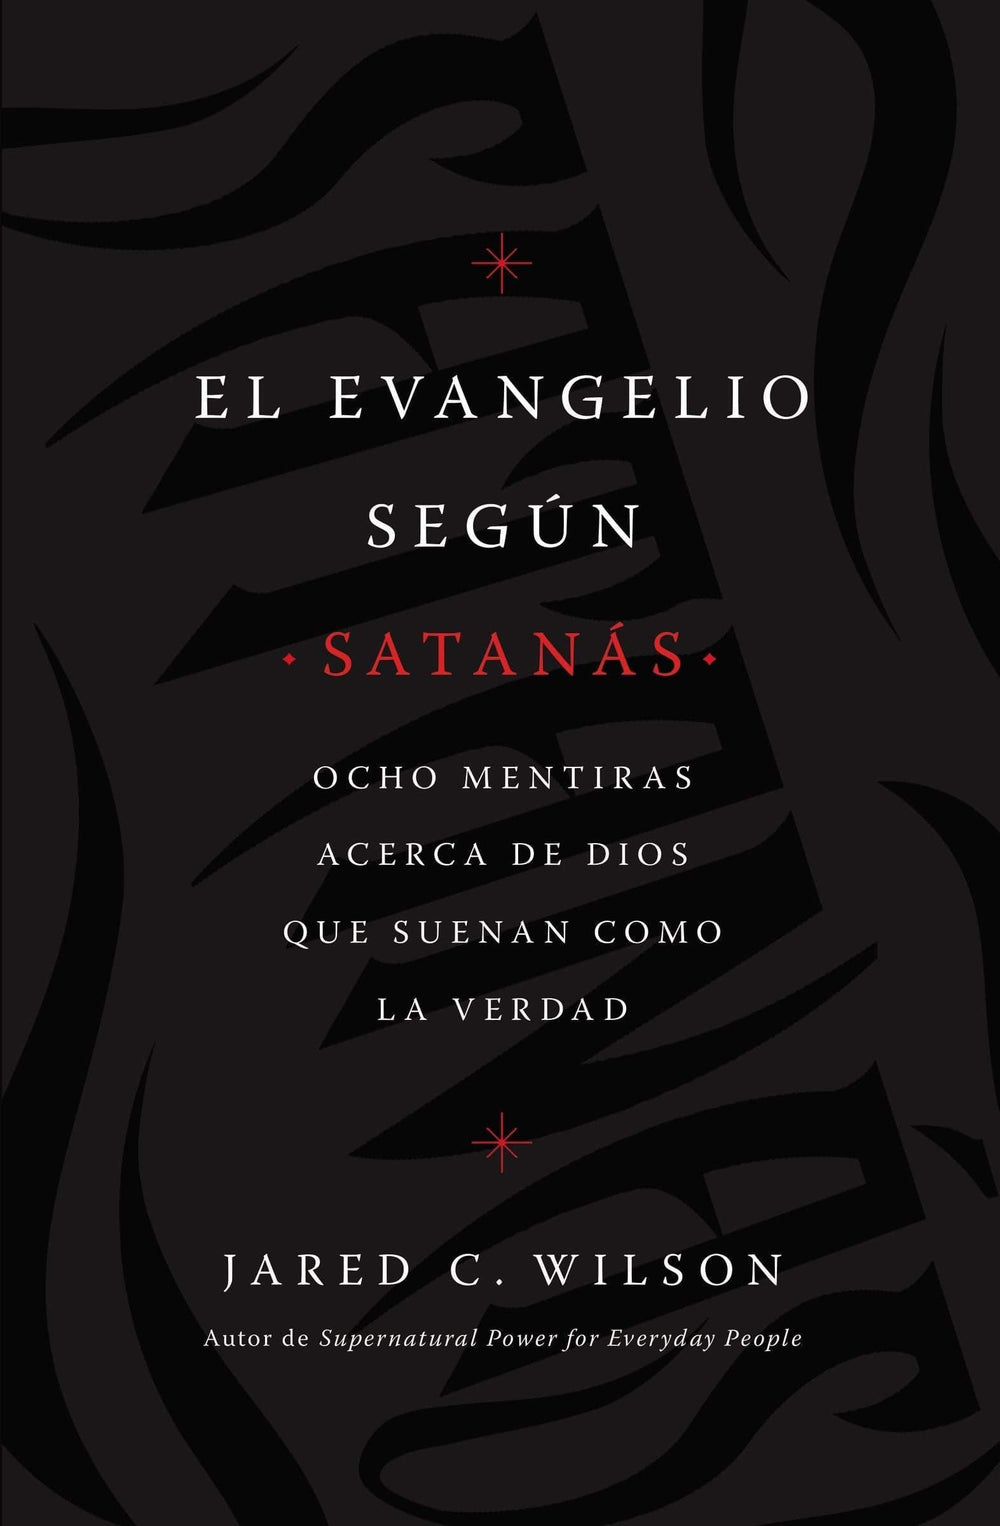 El Evangelio según Satanás - Jared C. Wilson - Pura Vida Books